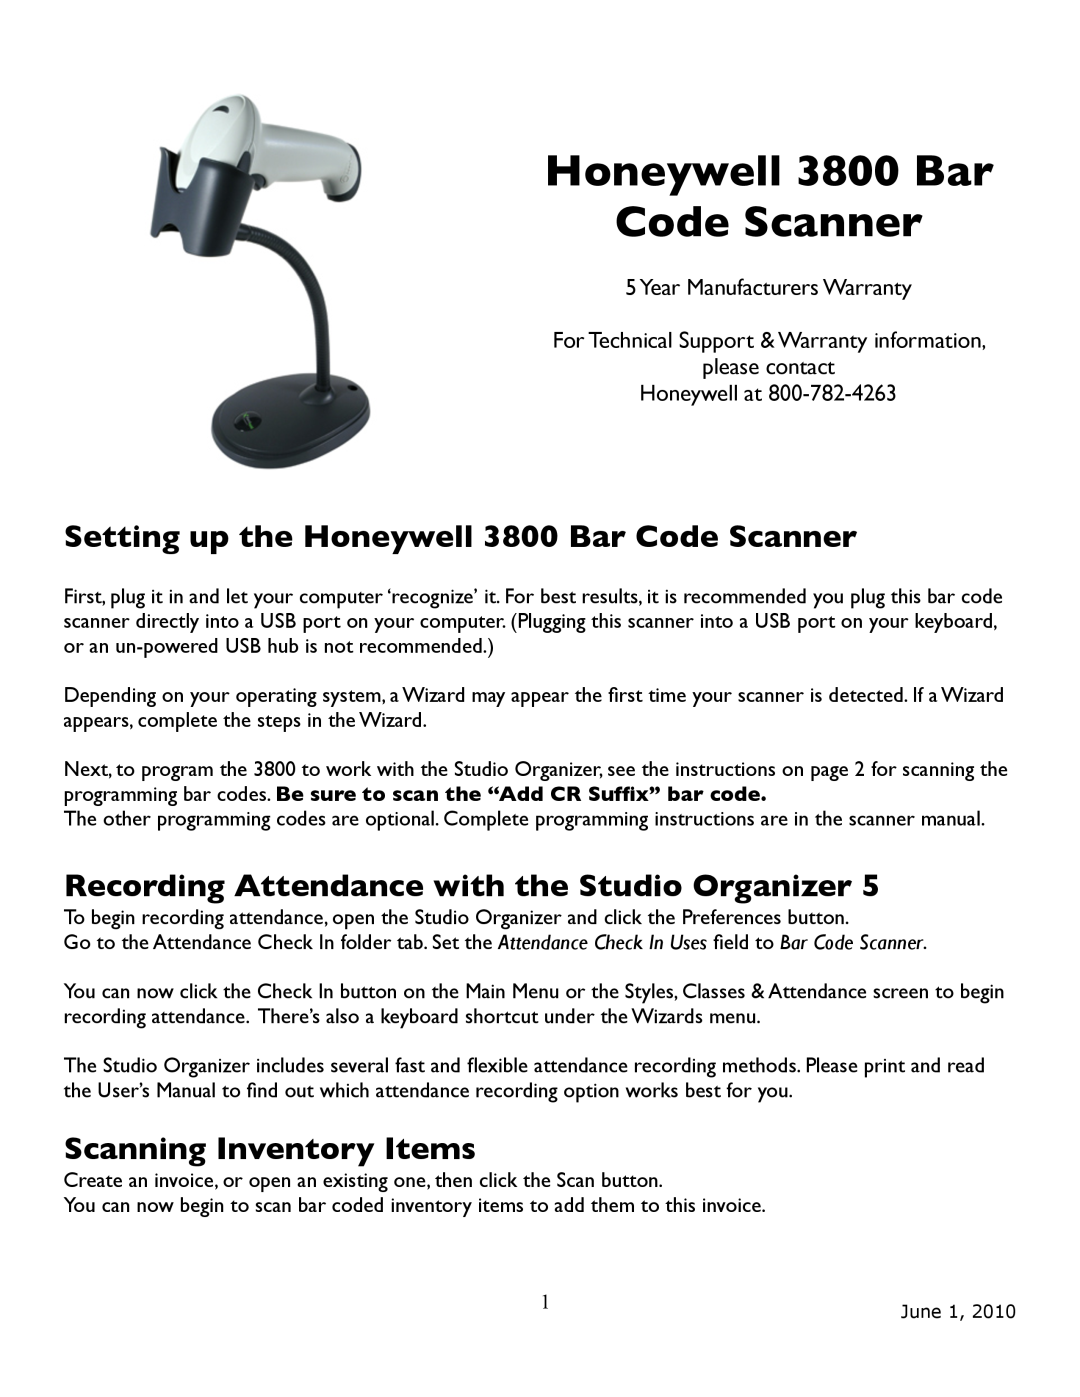 Honeywell user manual Setting up the Honeywell 3800 Bar Code Scanner, Scanning Inventory Items, Honeywell at 